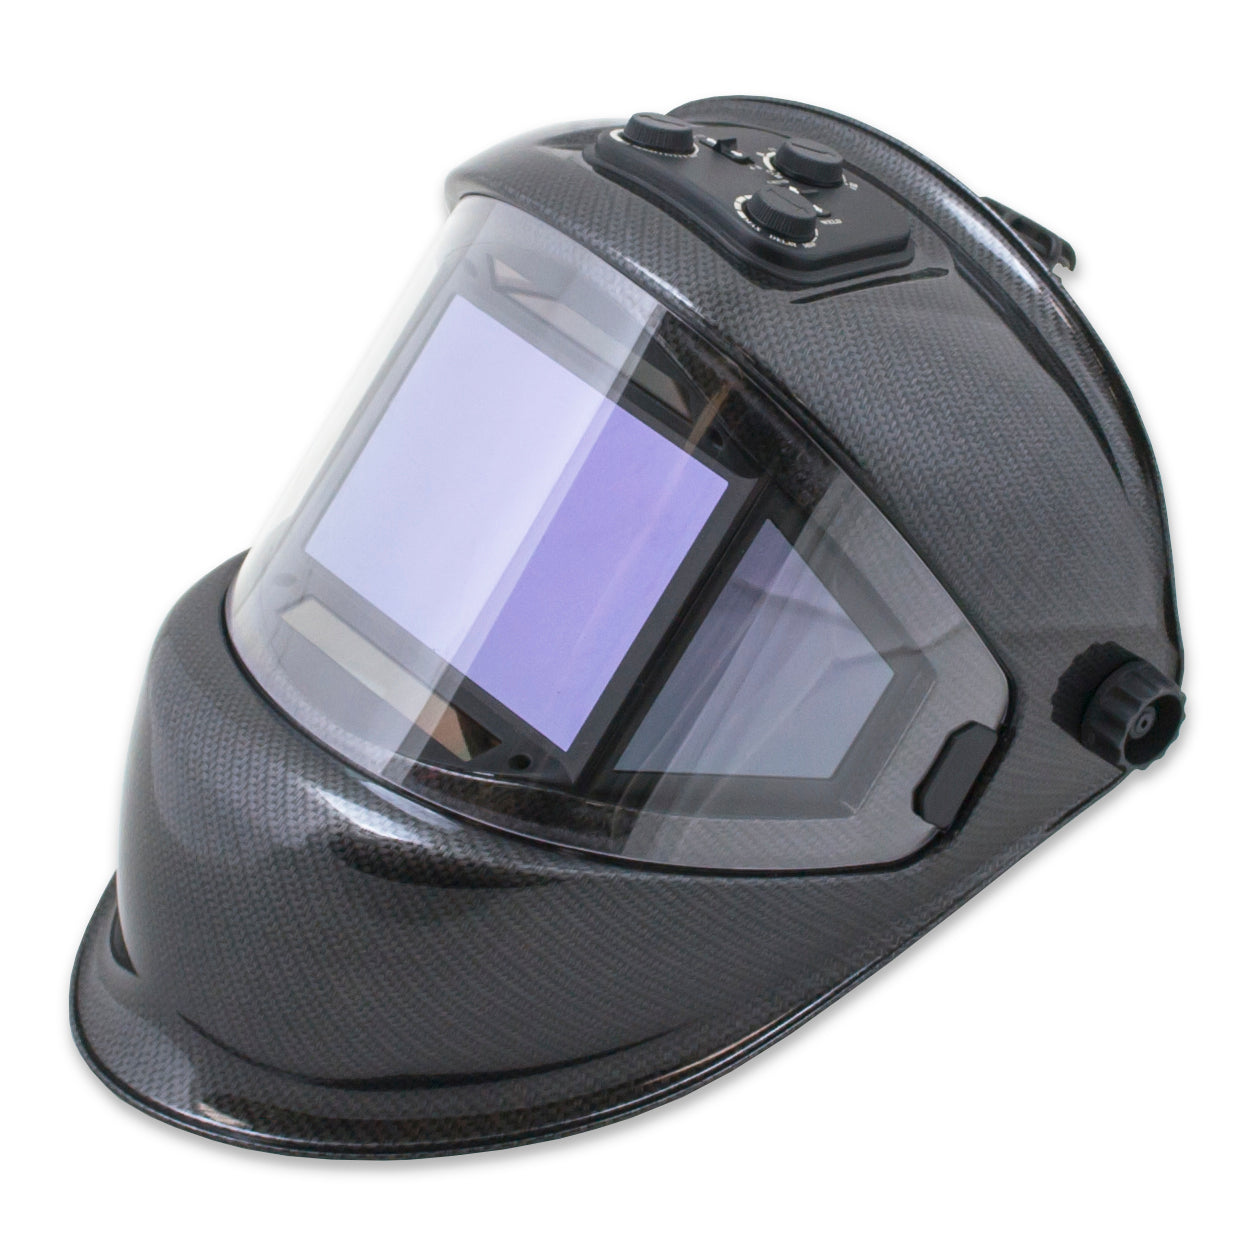 TGR Panoramic 180 View Solar Powered Auto Darkening Welding Helmet - True Color (Carbon Fiber) - Tool Guy Republic